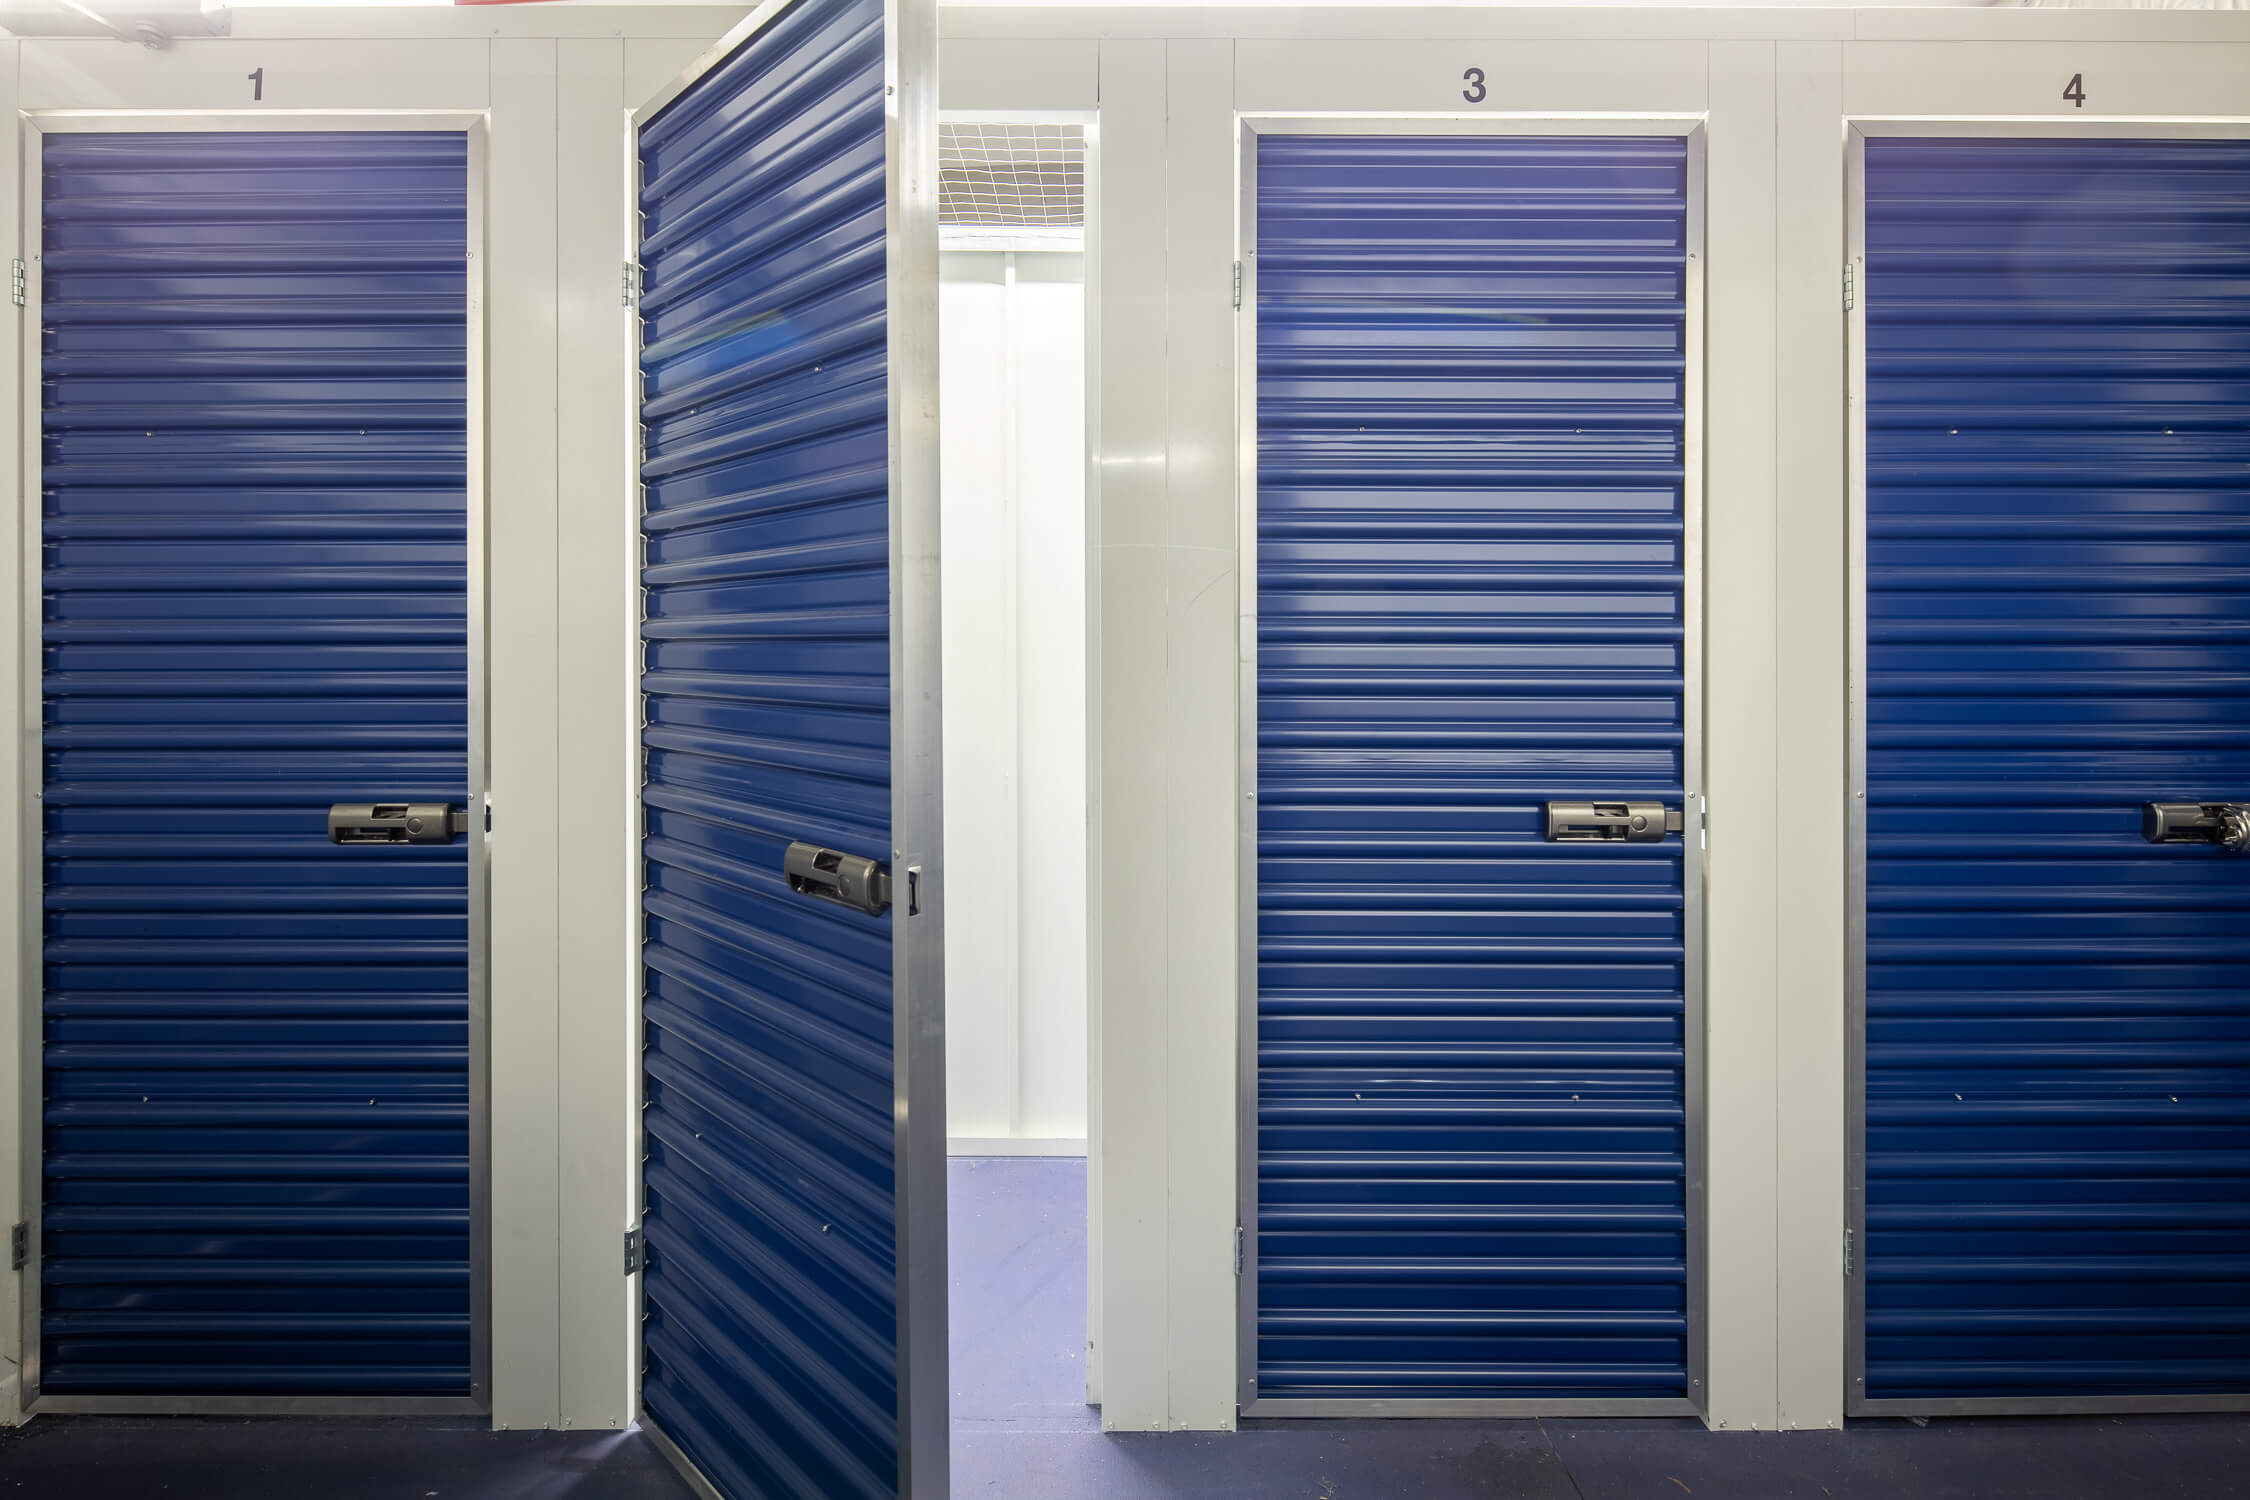 View inside a storage locker